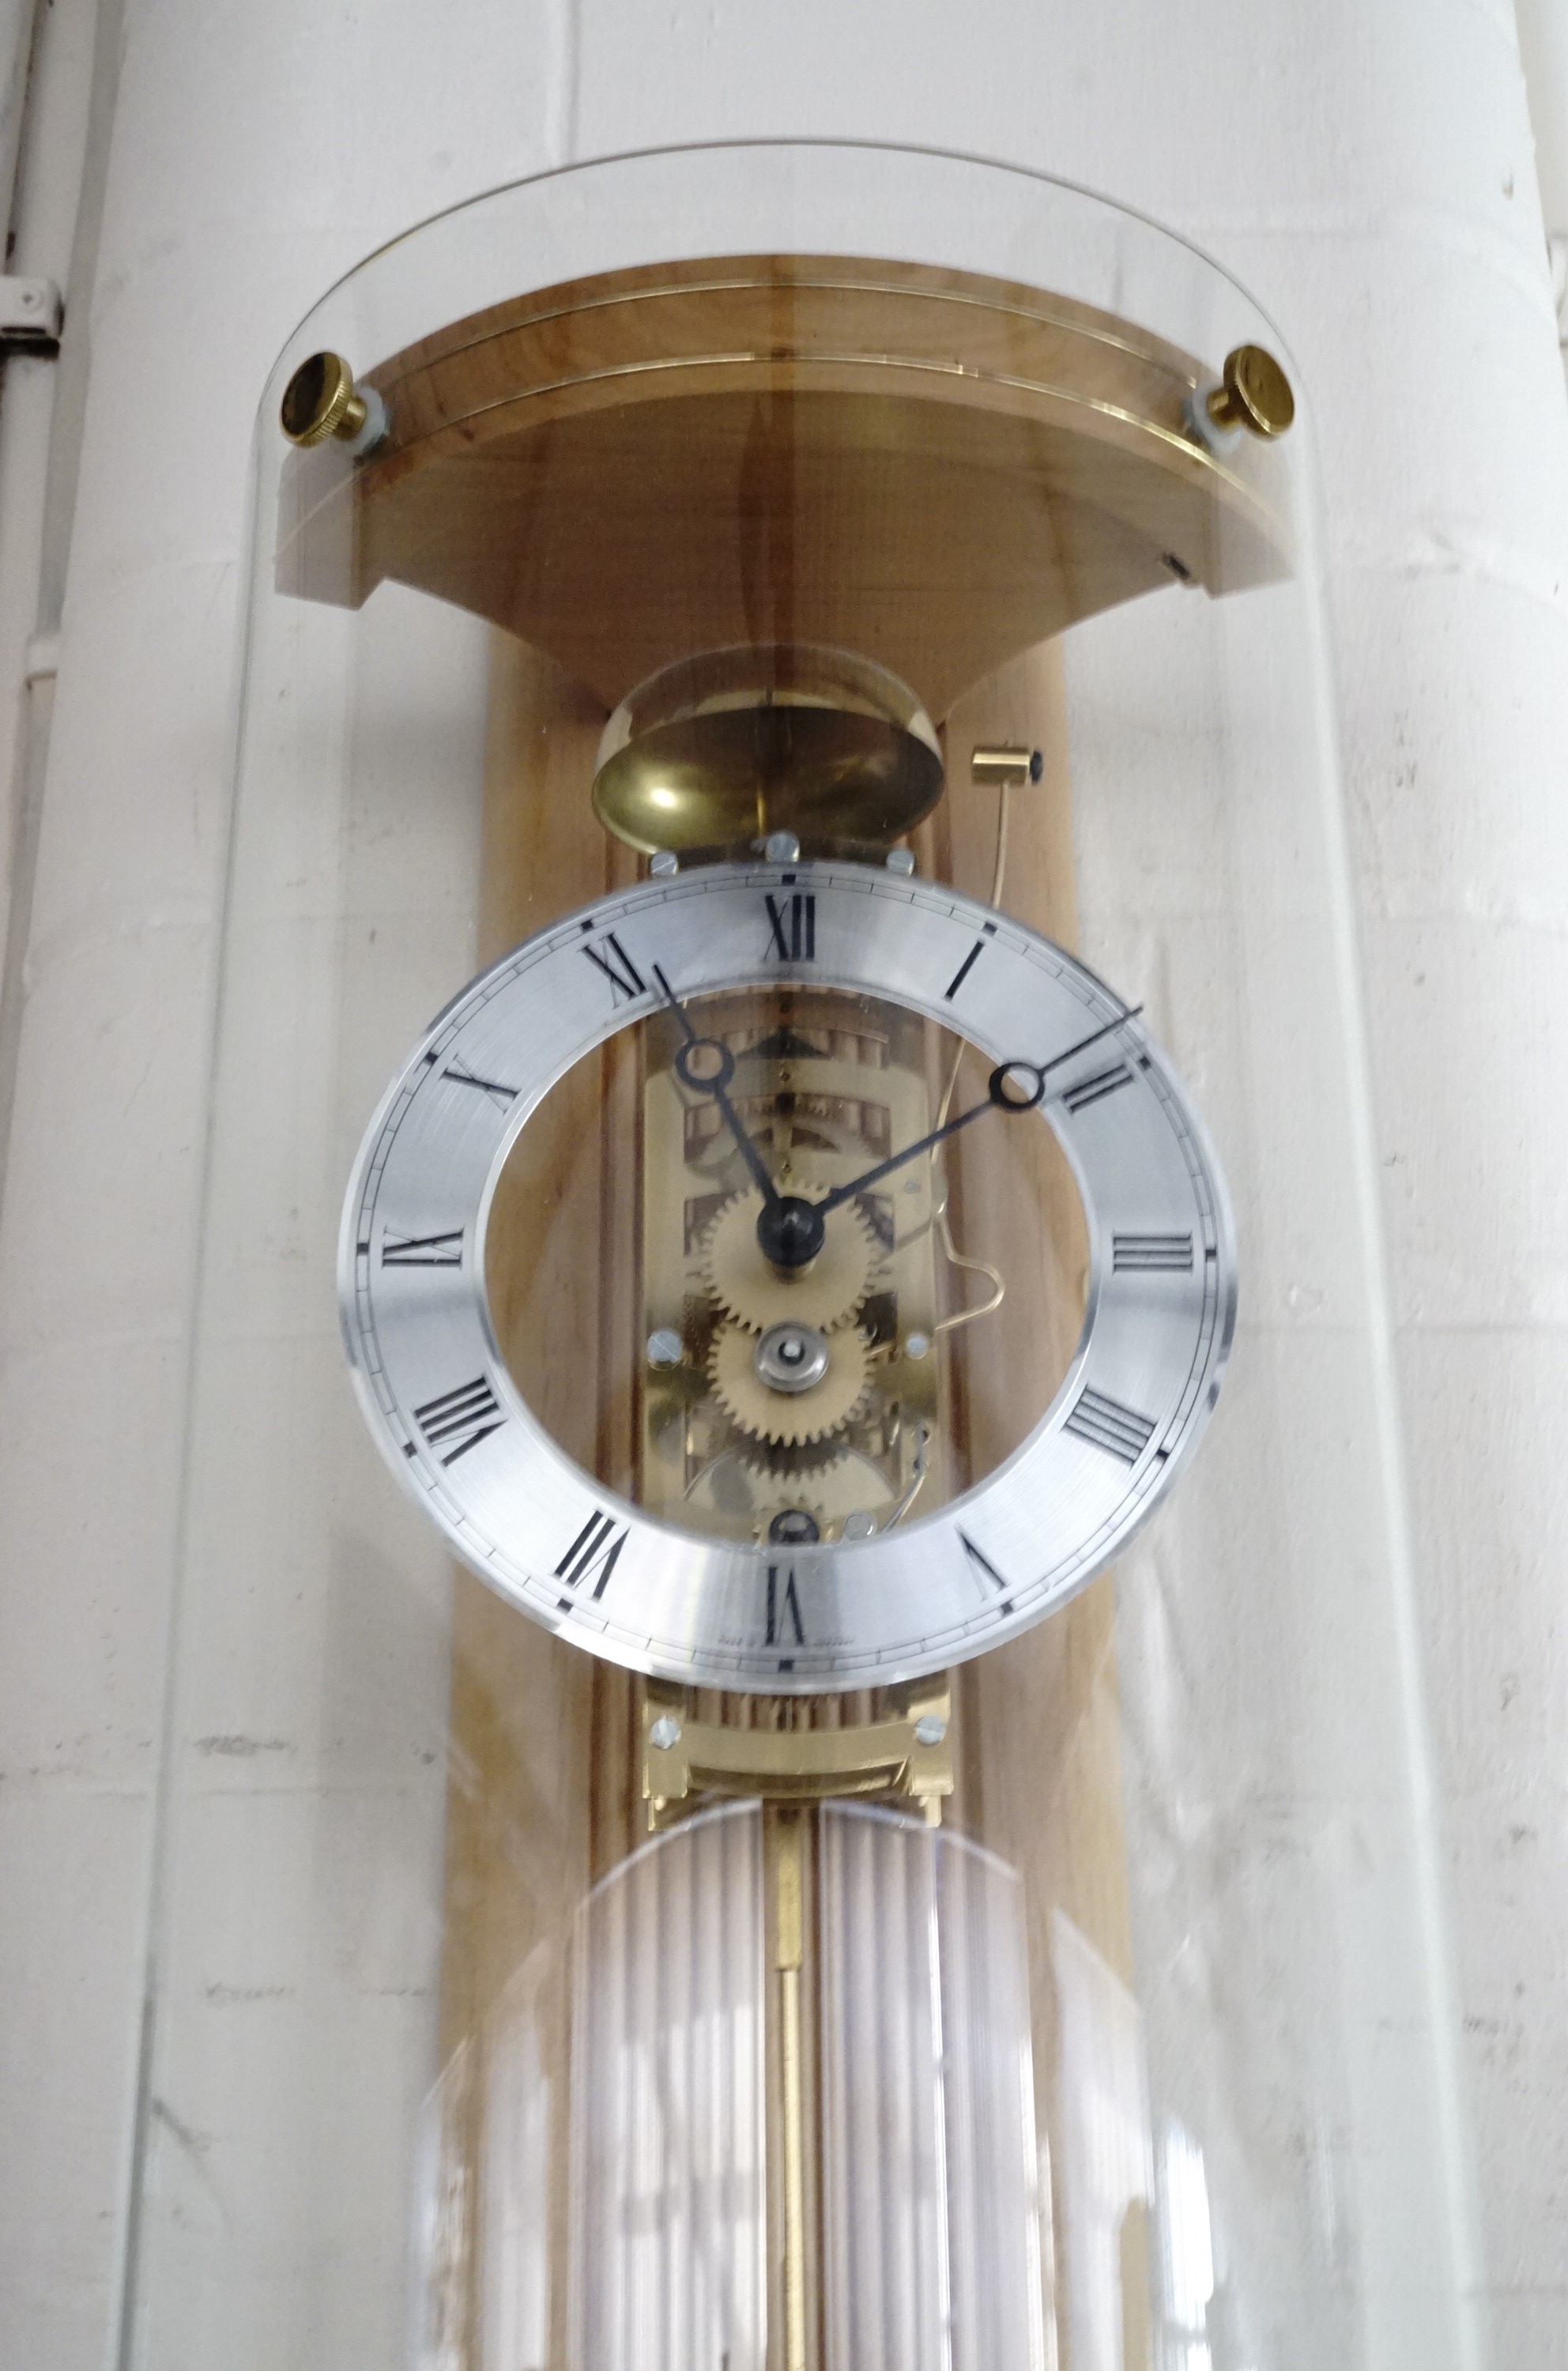 A contemporary Billib wall clock, 73 cm - Image 2 of 2